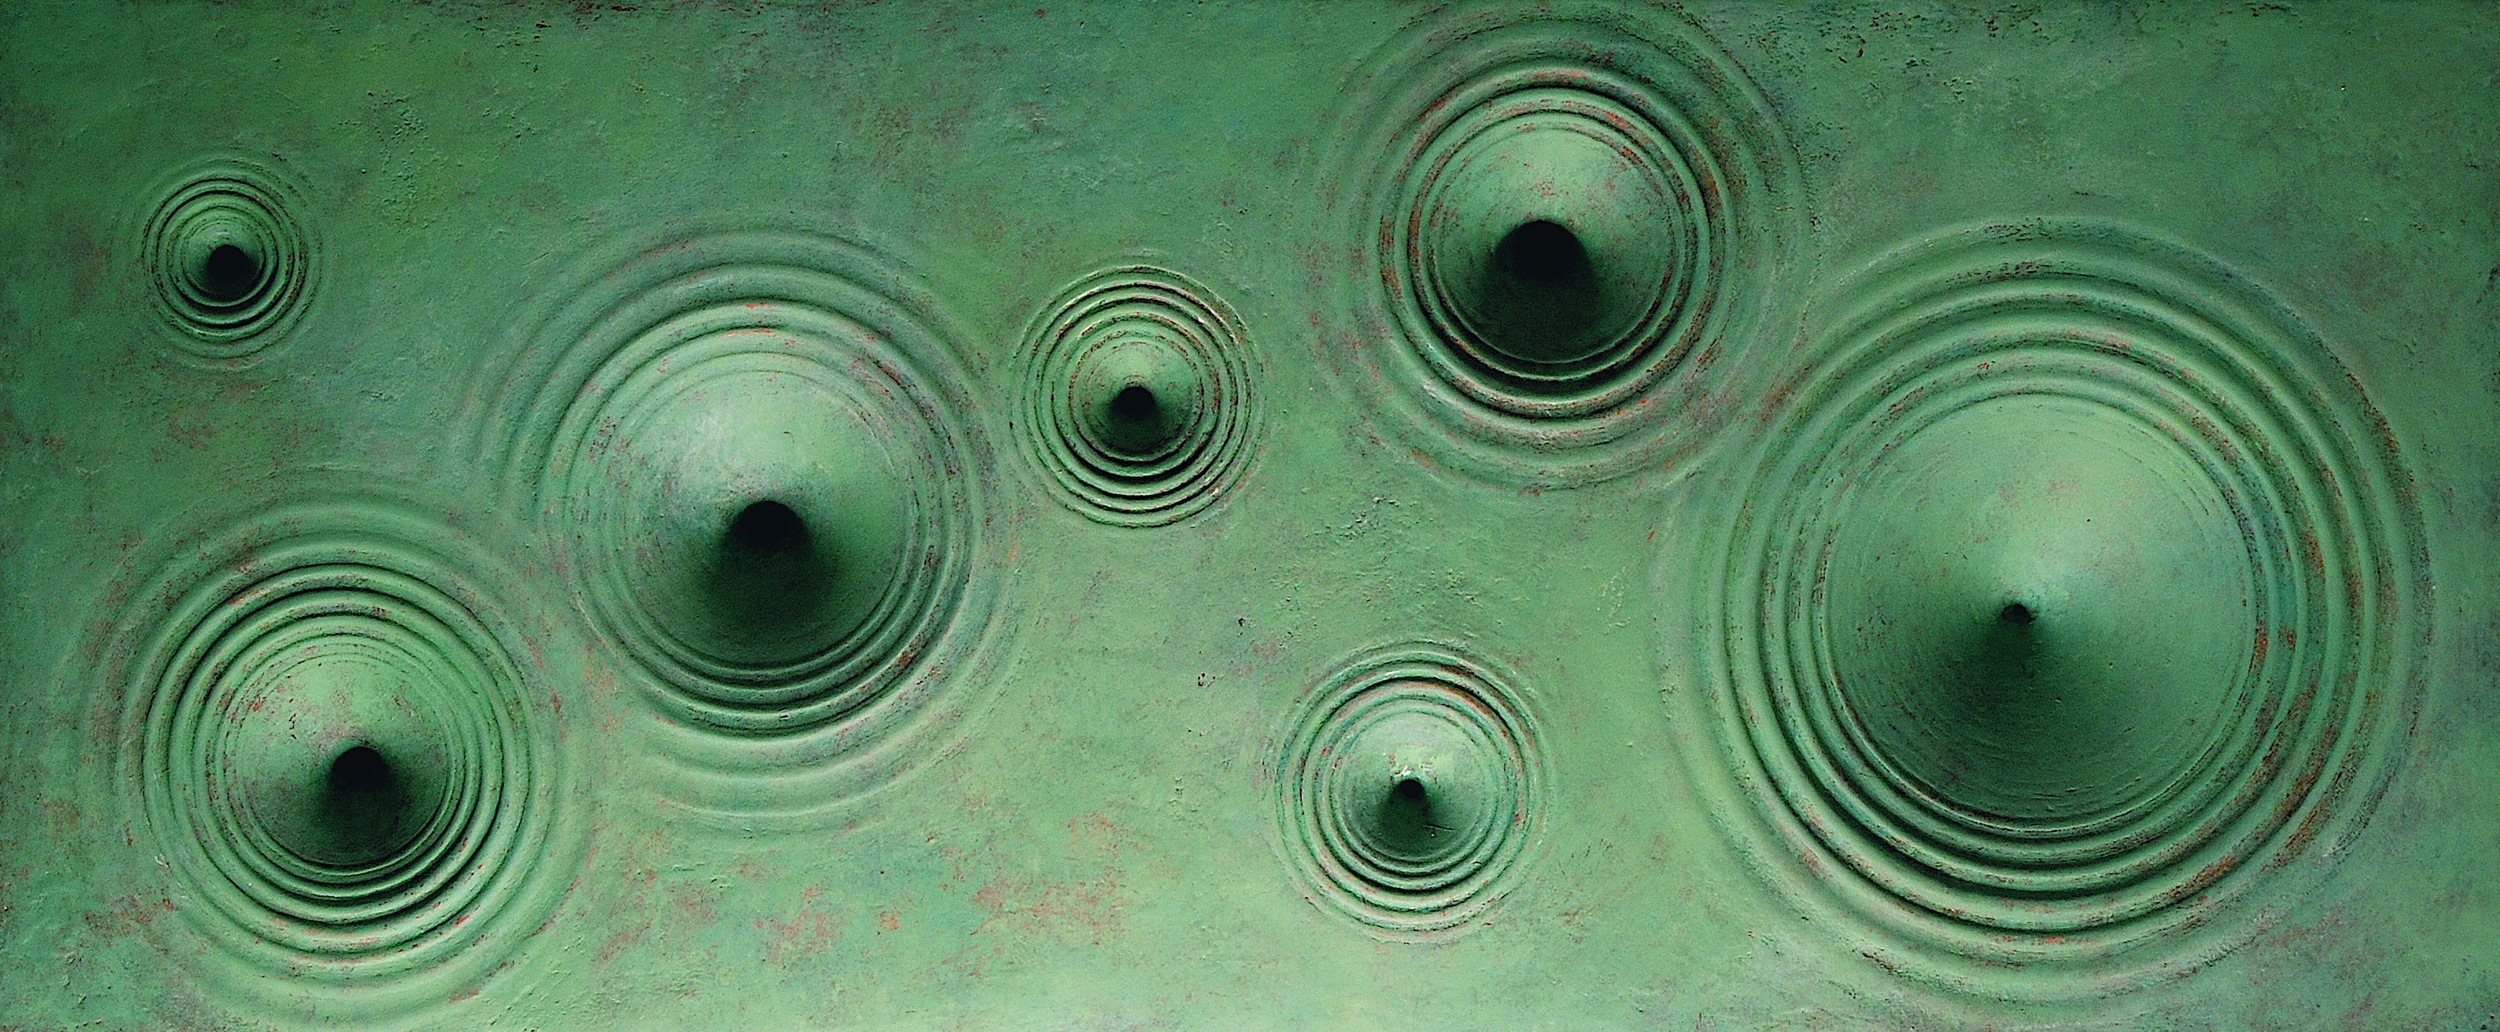 Thomas Coffin - Vortex (green), 14"h x 30"w x 3"d, mixed media sculptural wall relief